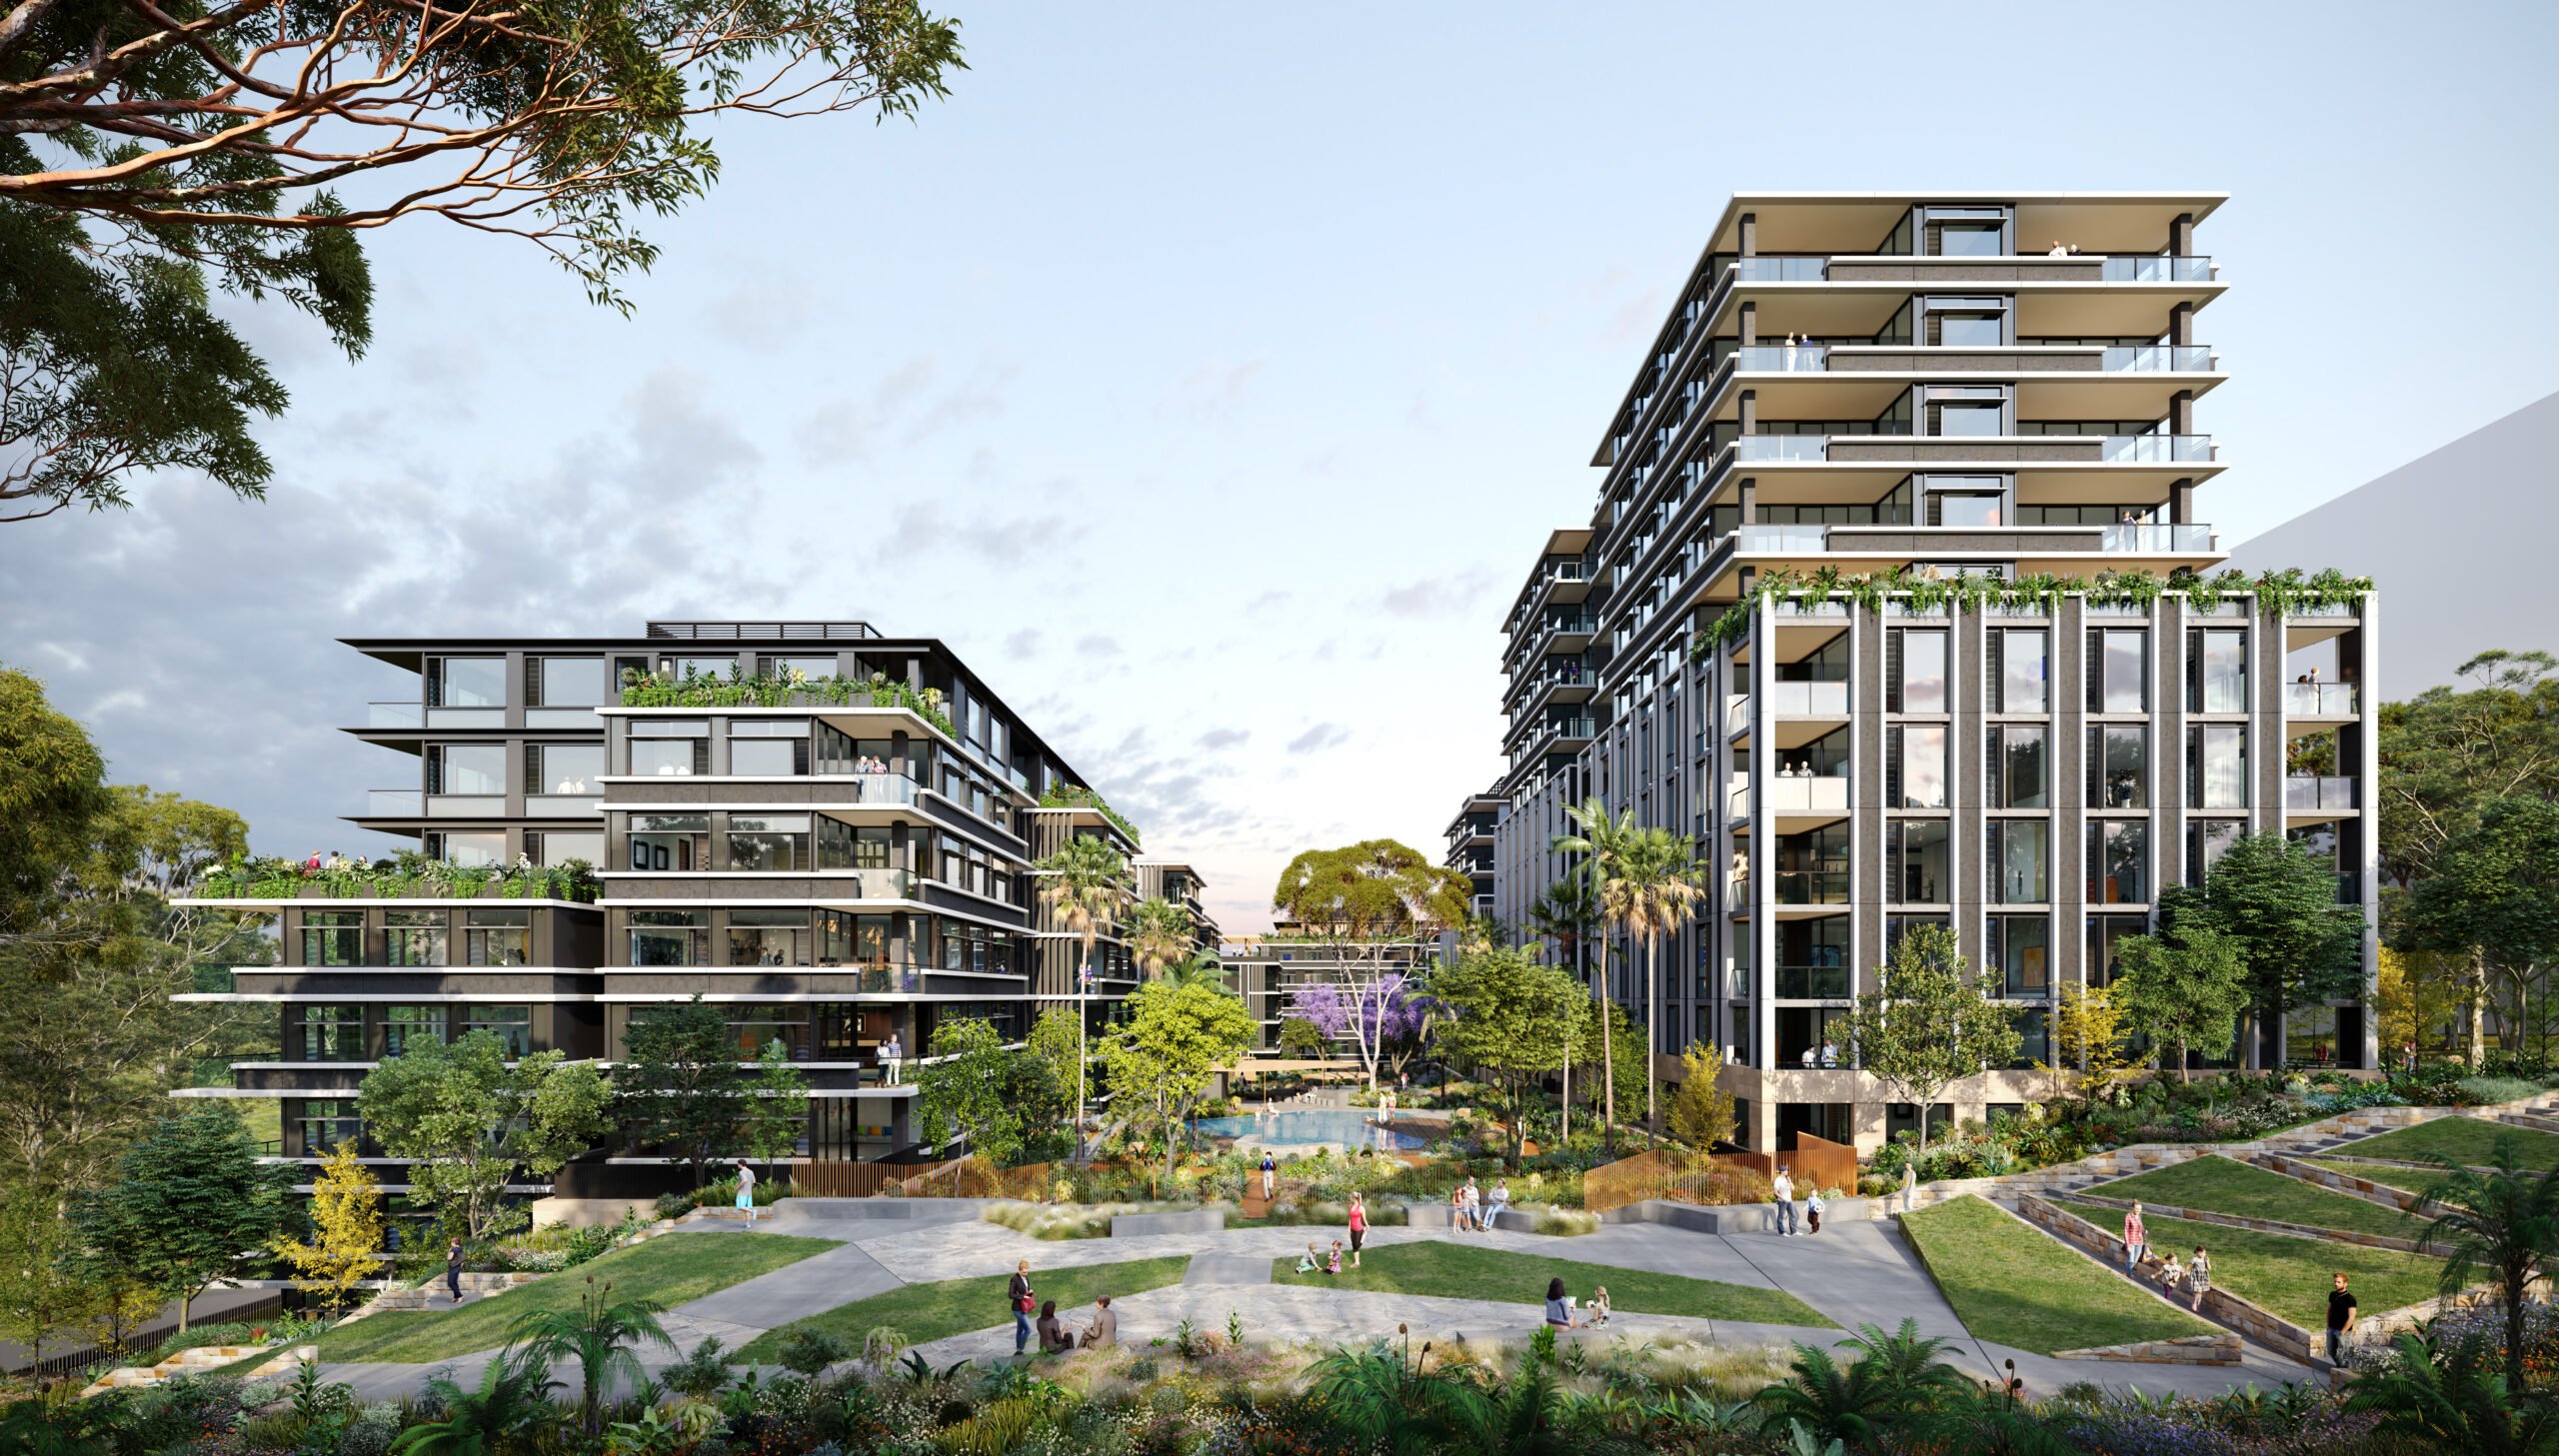 Top Spring Australia lodges DA for major St Leonards residential precinct